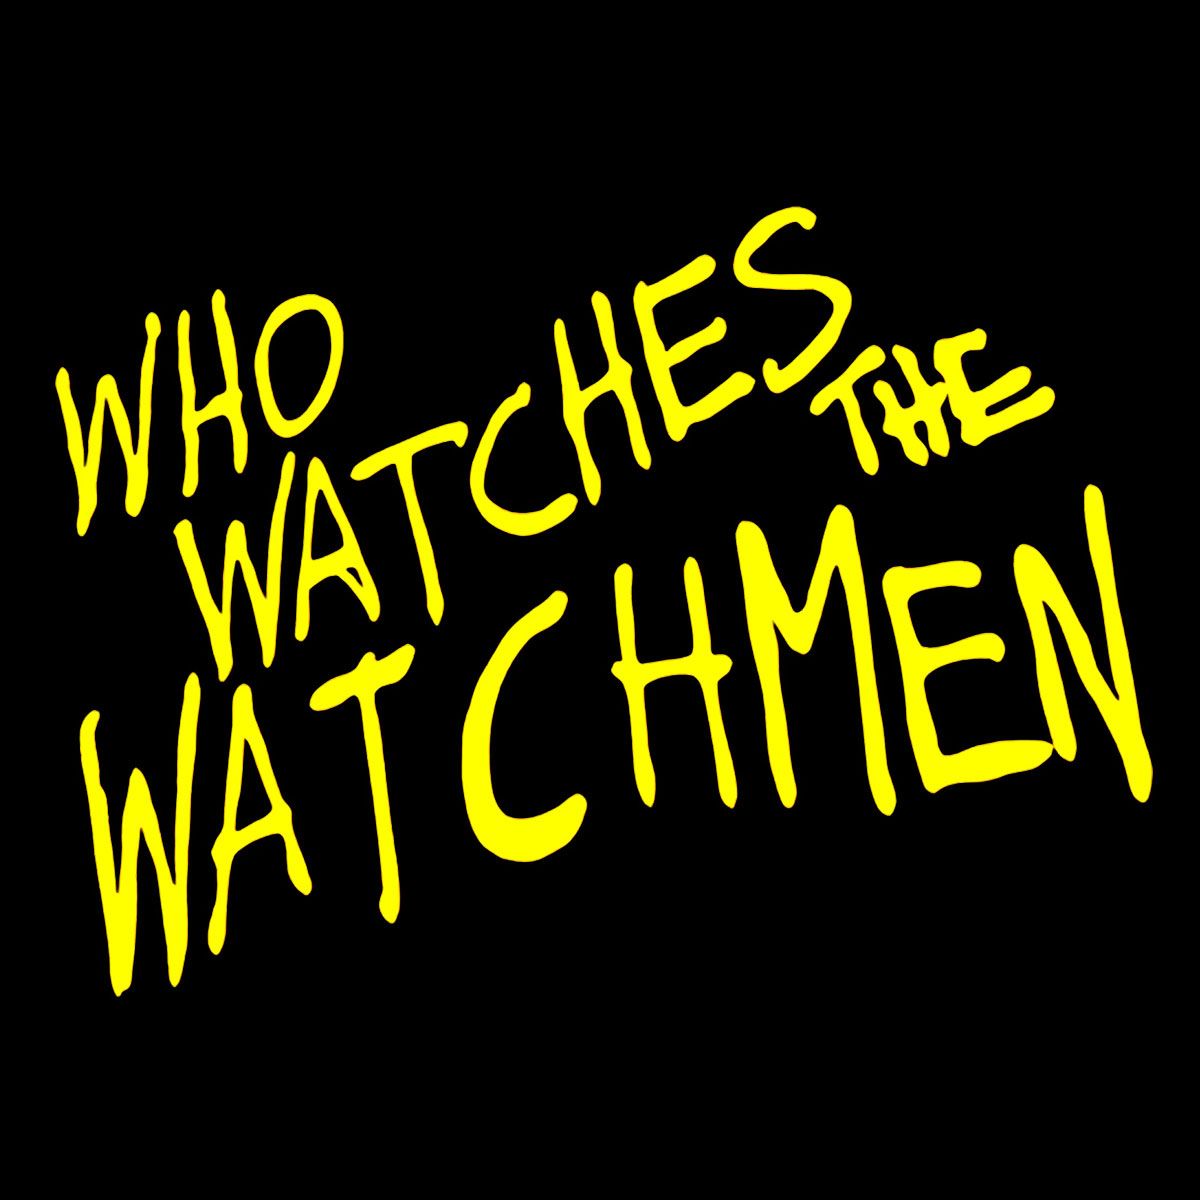 Nome do produto: Watchmen